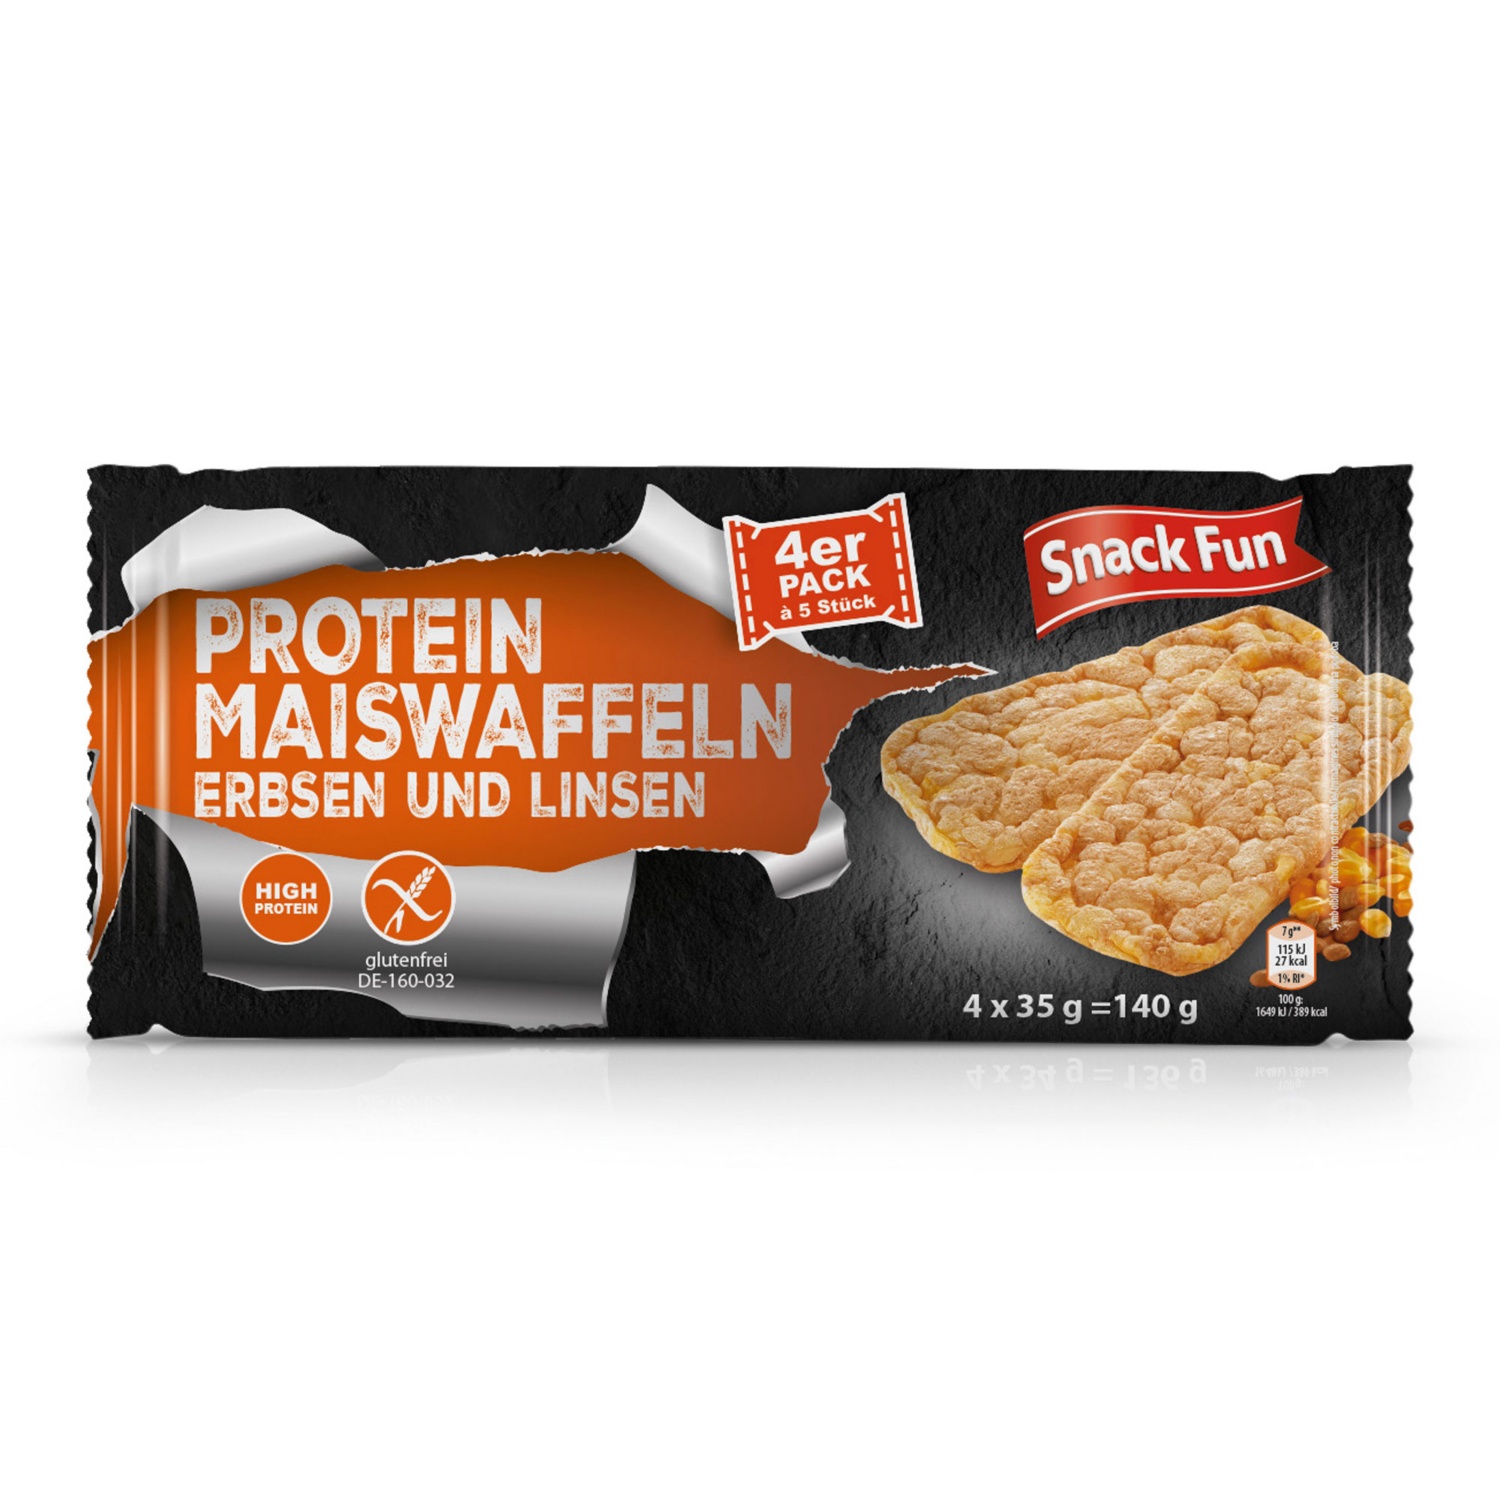 SNACK FUN Protein Reis-/Maiswaffeln, Linsen